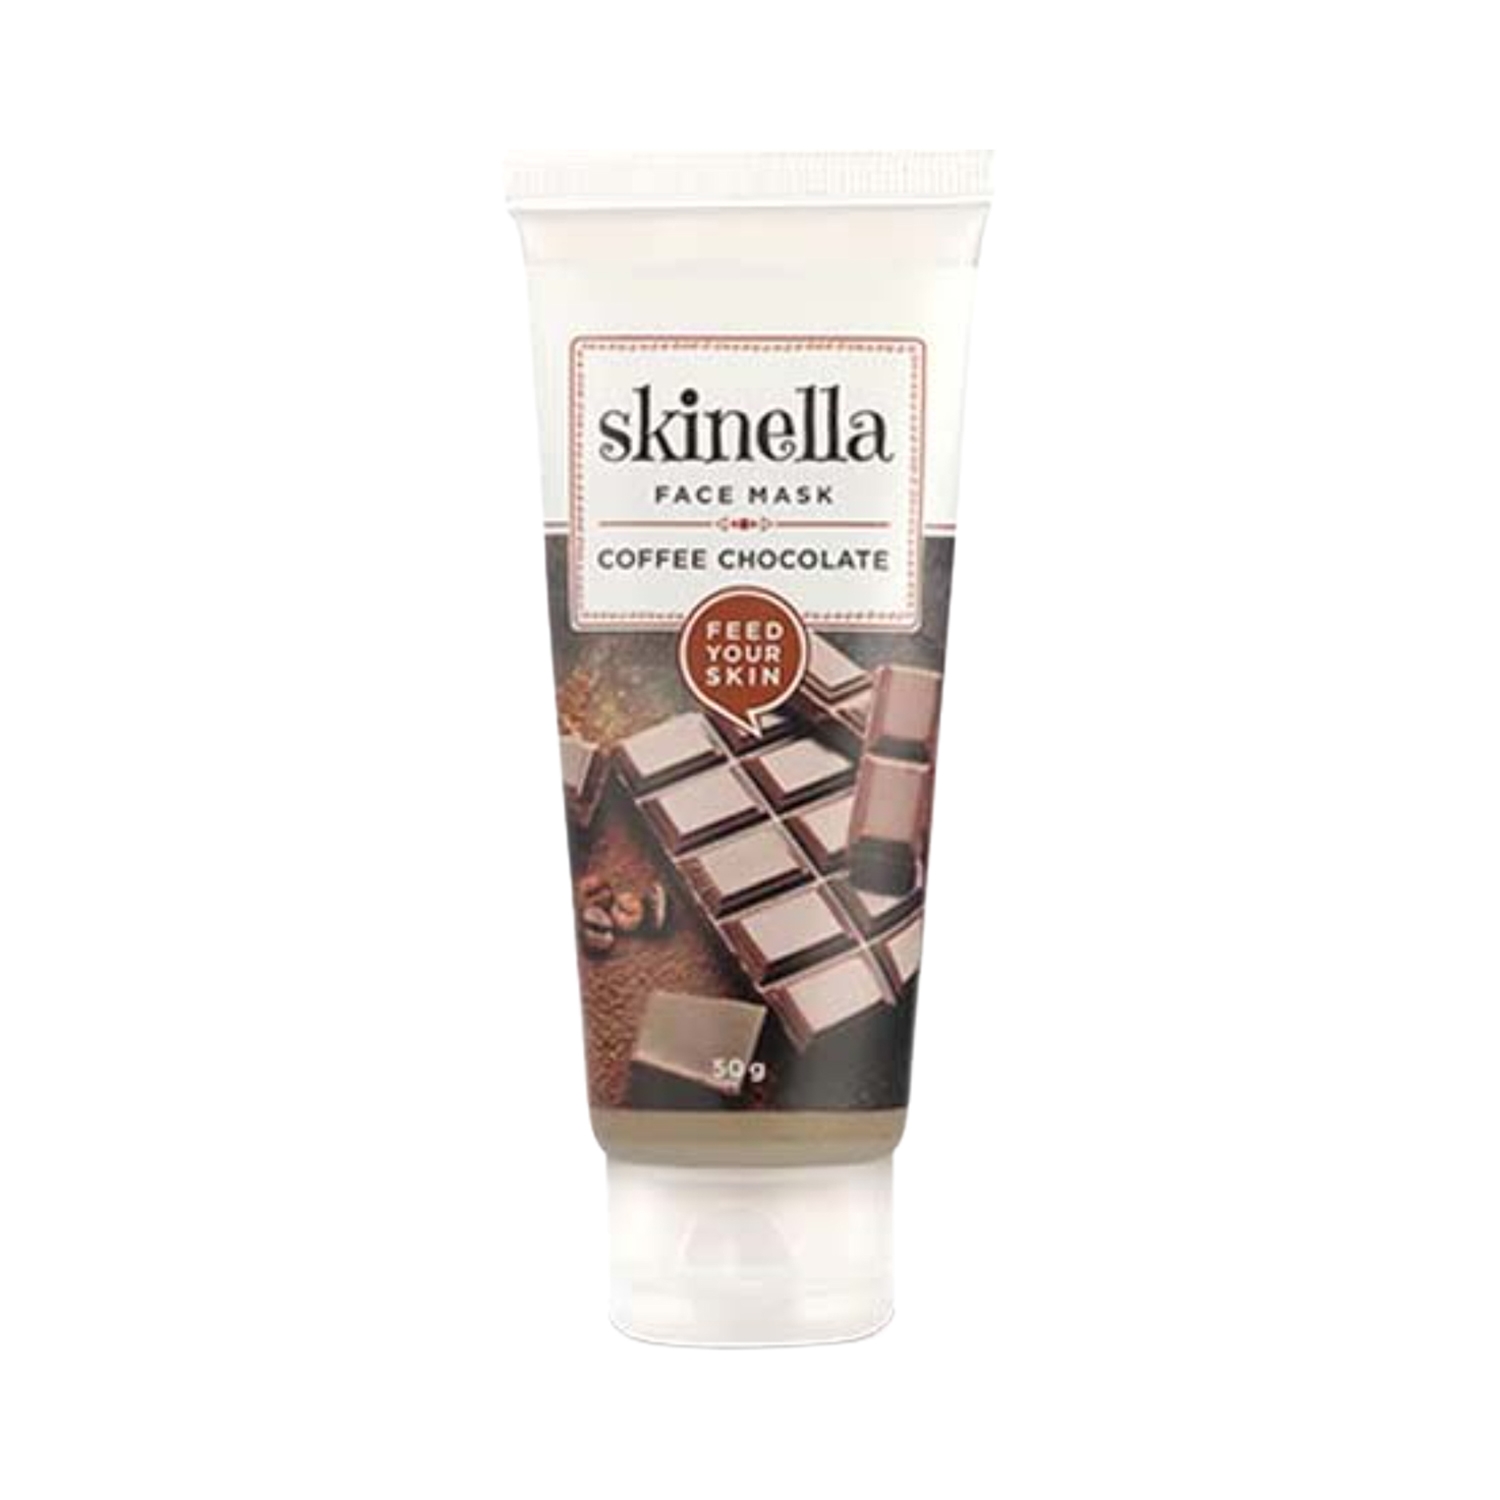 Skinella Face Mask - Coffee Chocolate (50g)